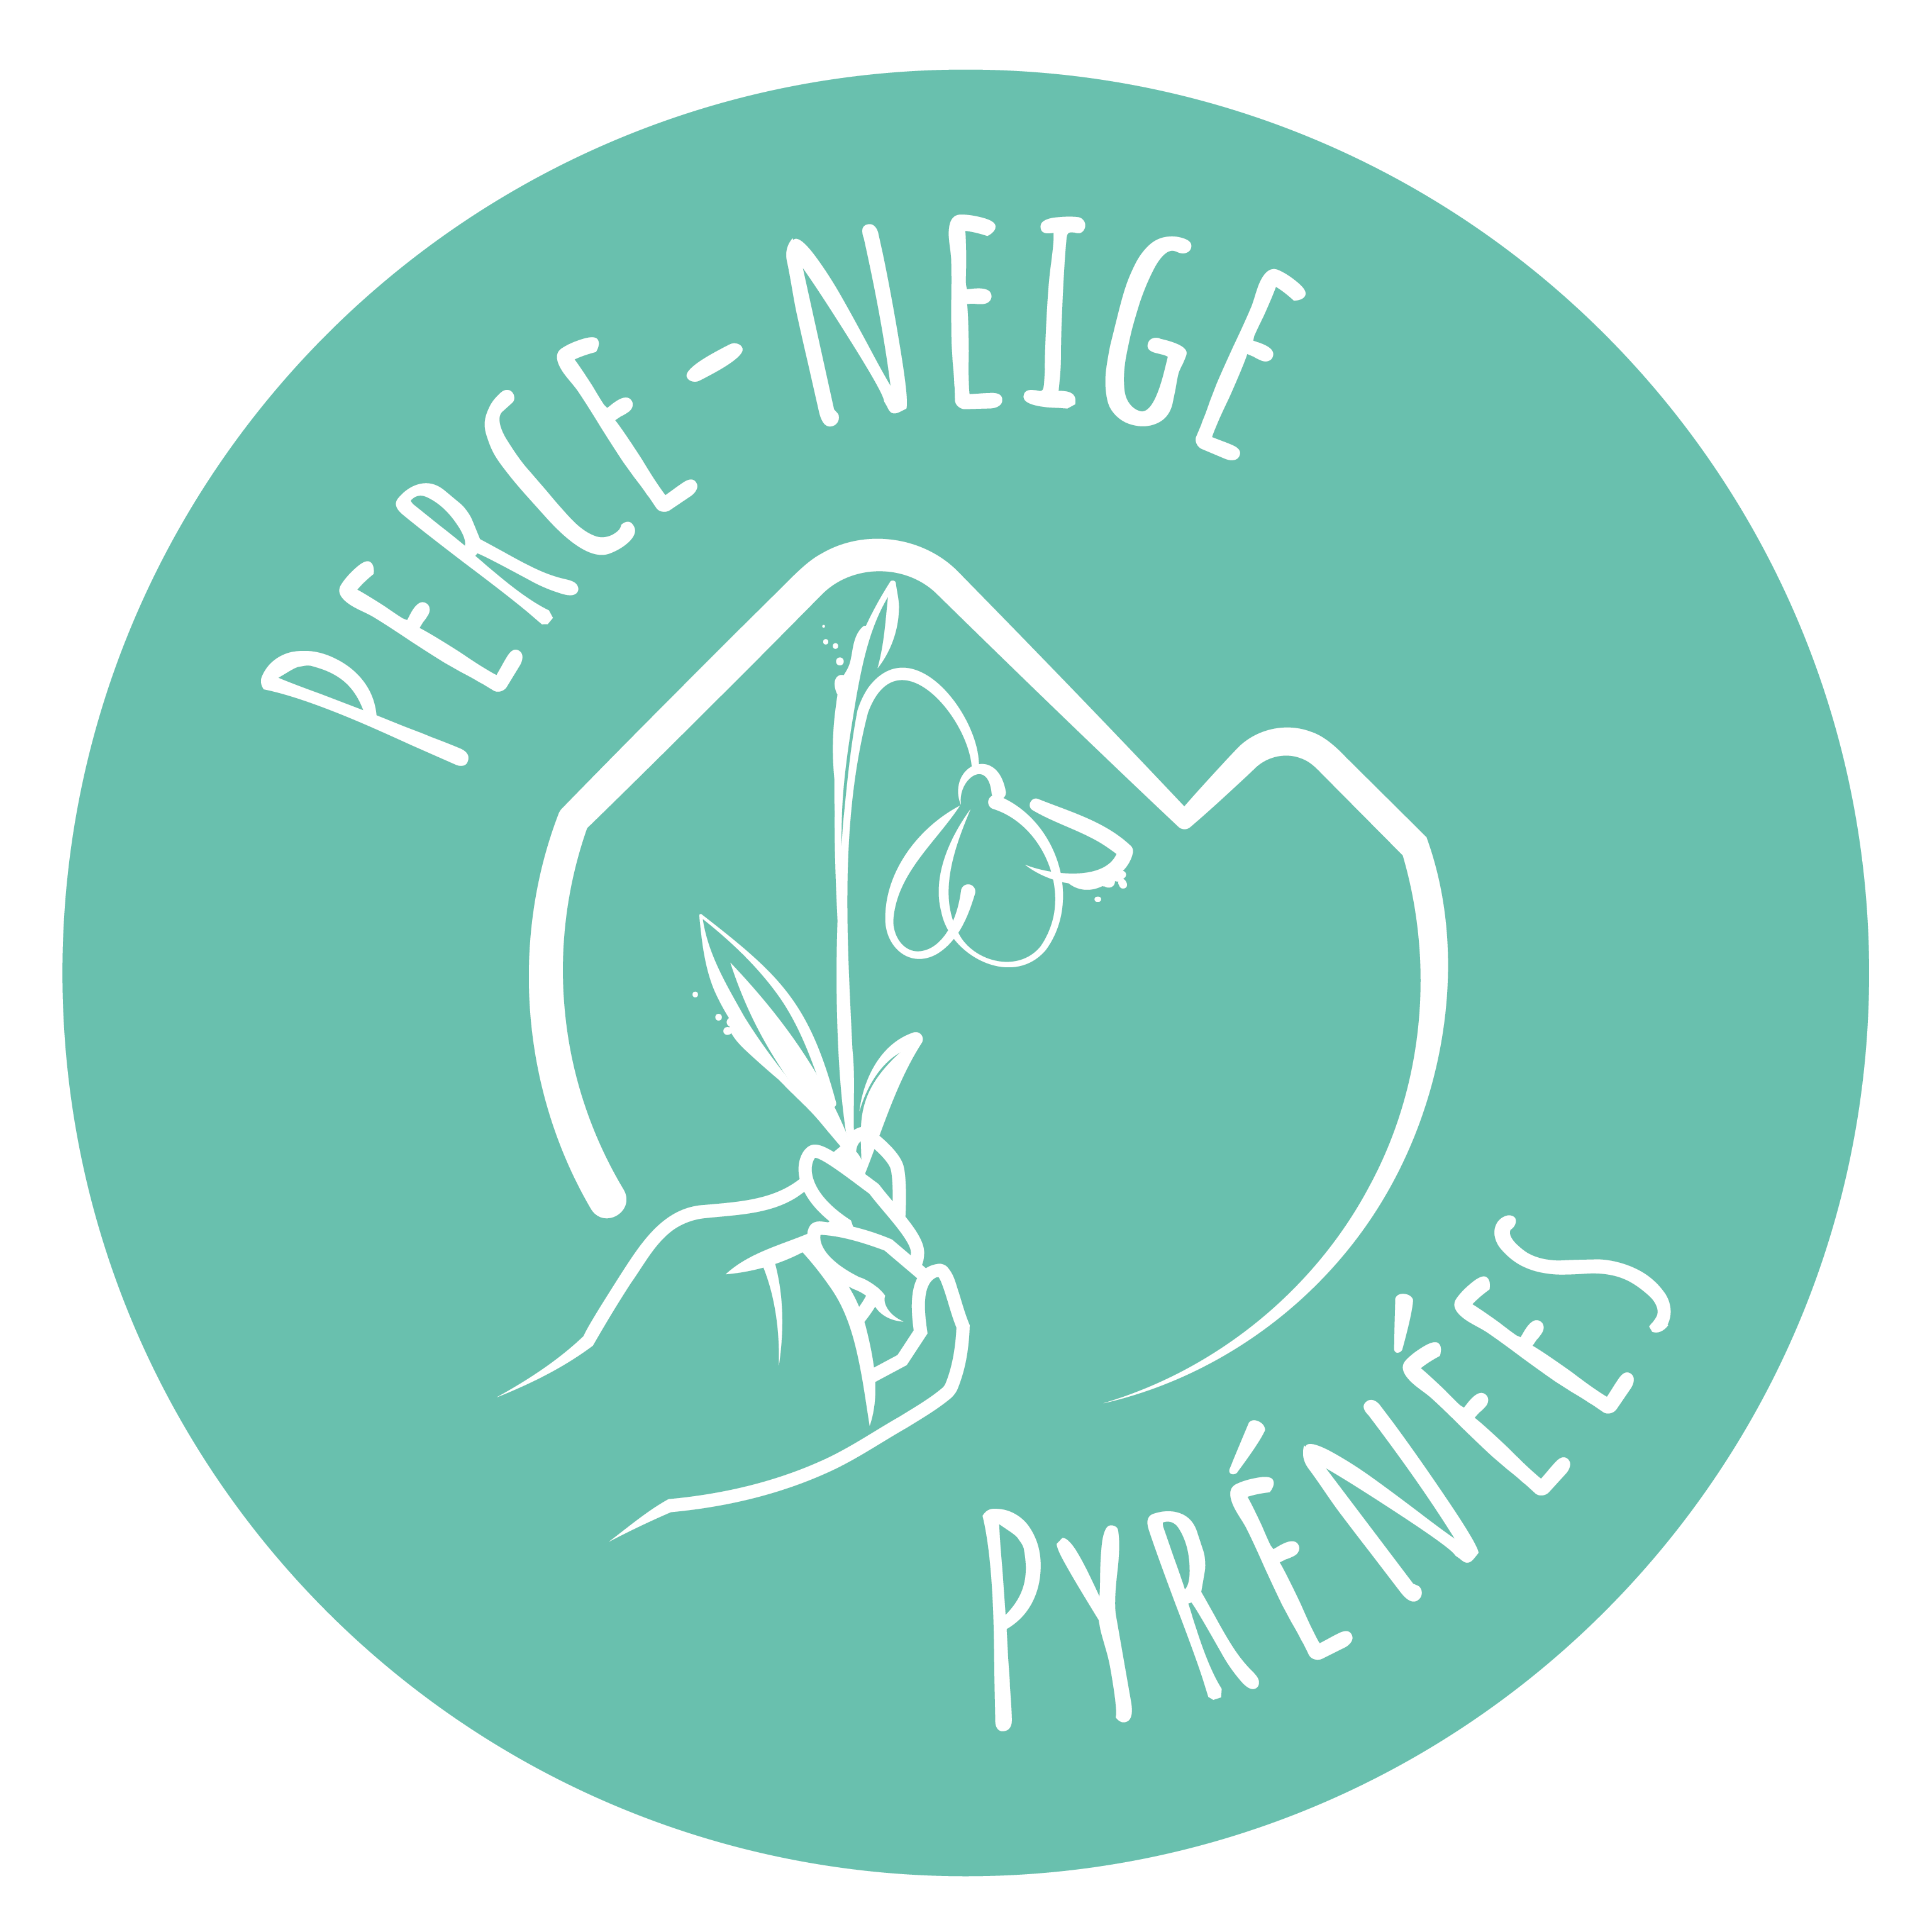 Perce Neige Pyrénées